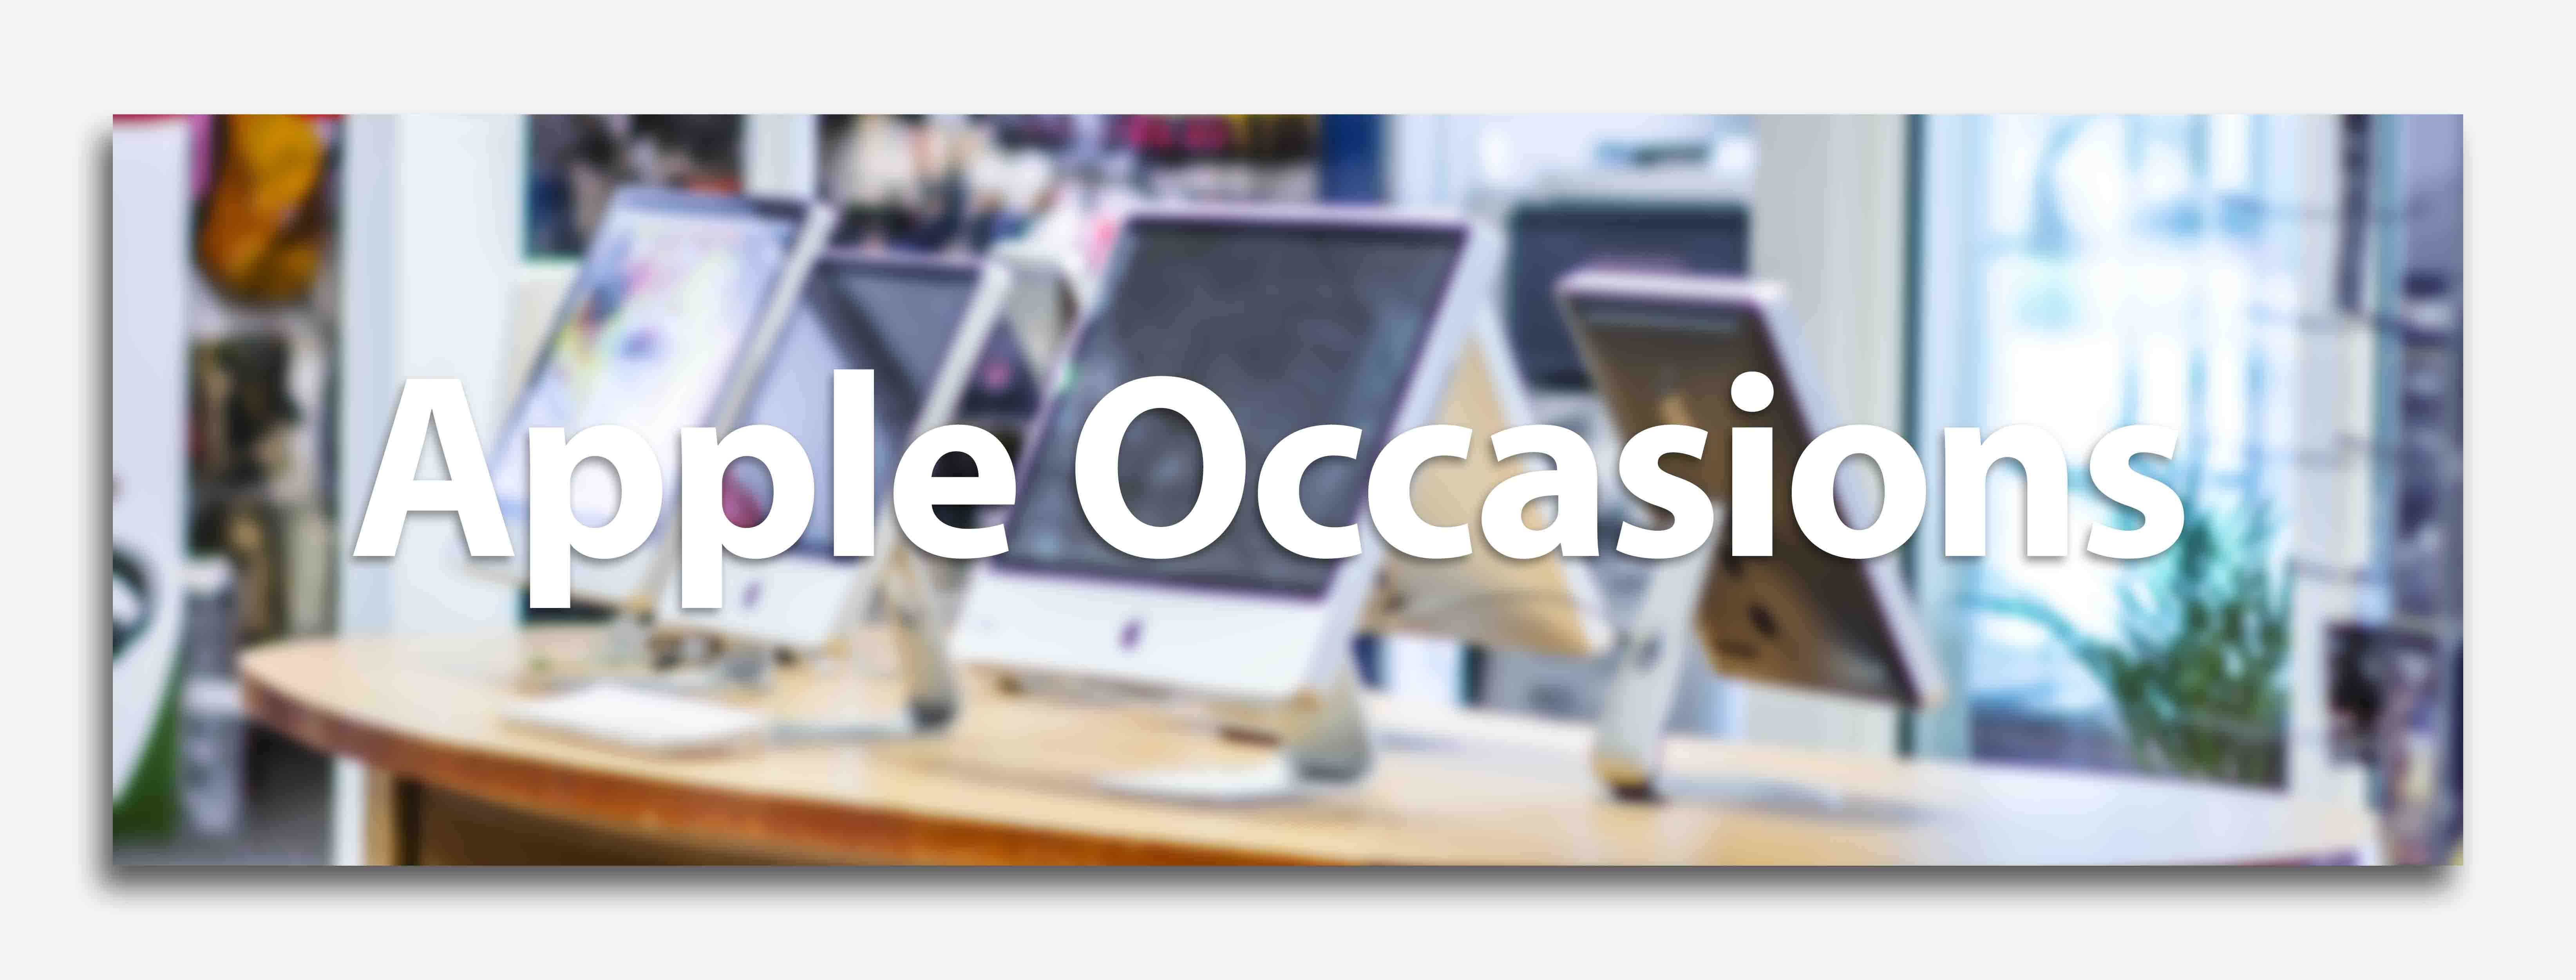 apple occasions iMac macbook pro